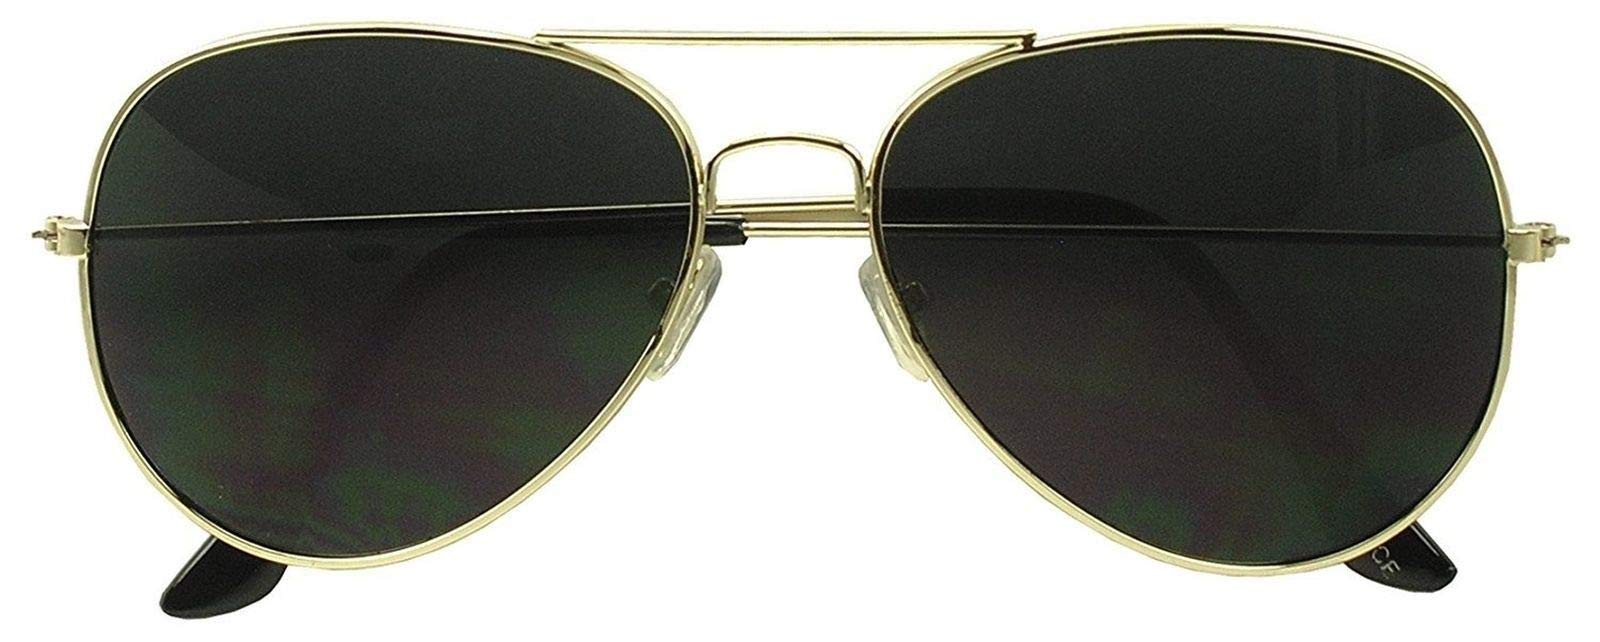 Dark Aviator Sunglasses - Gold Frame 